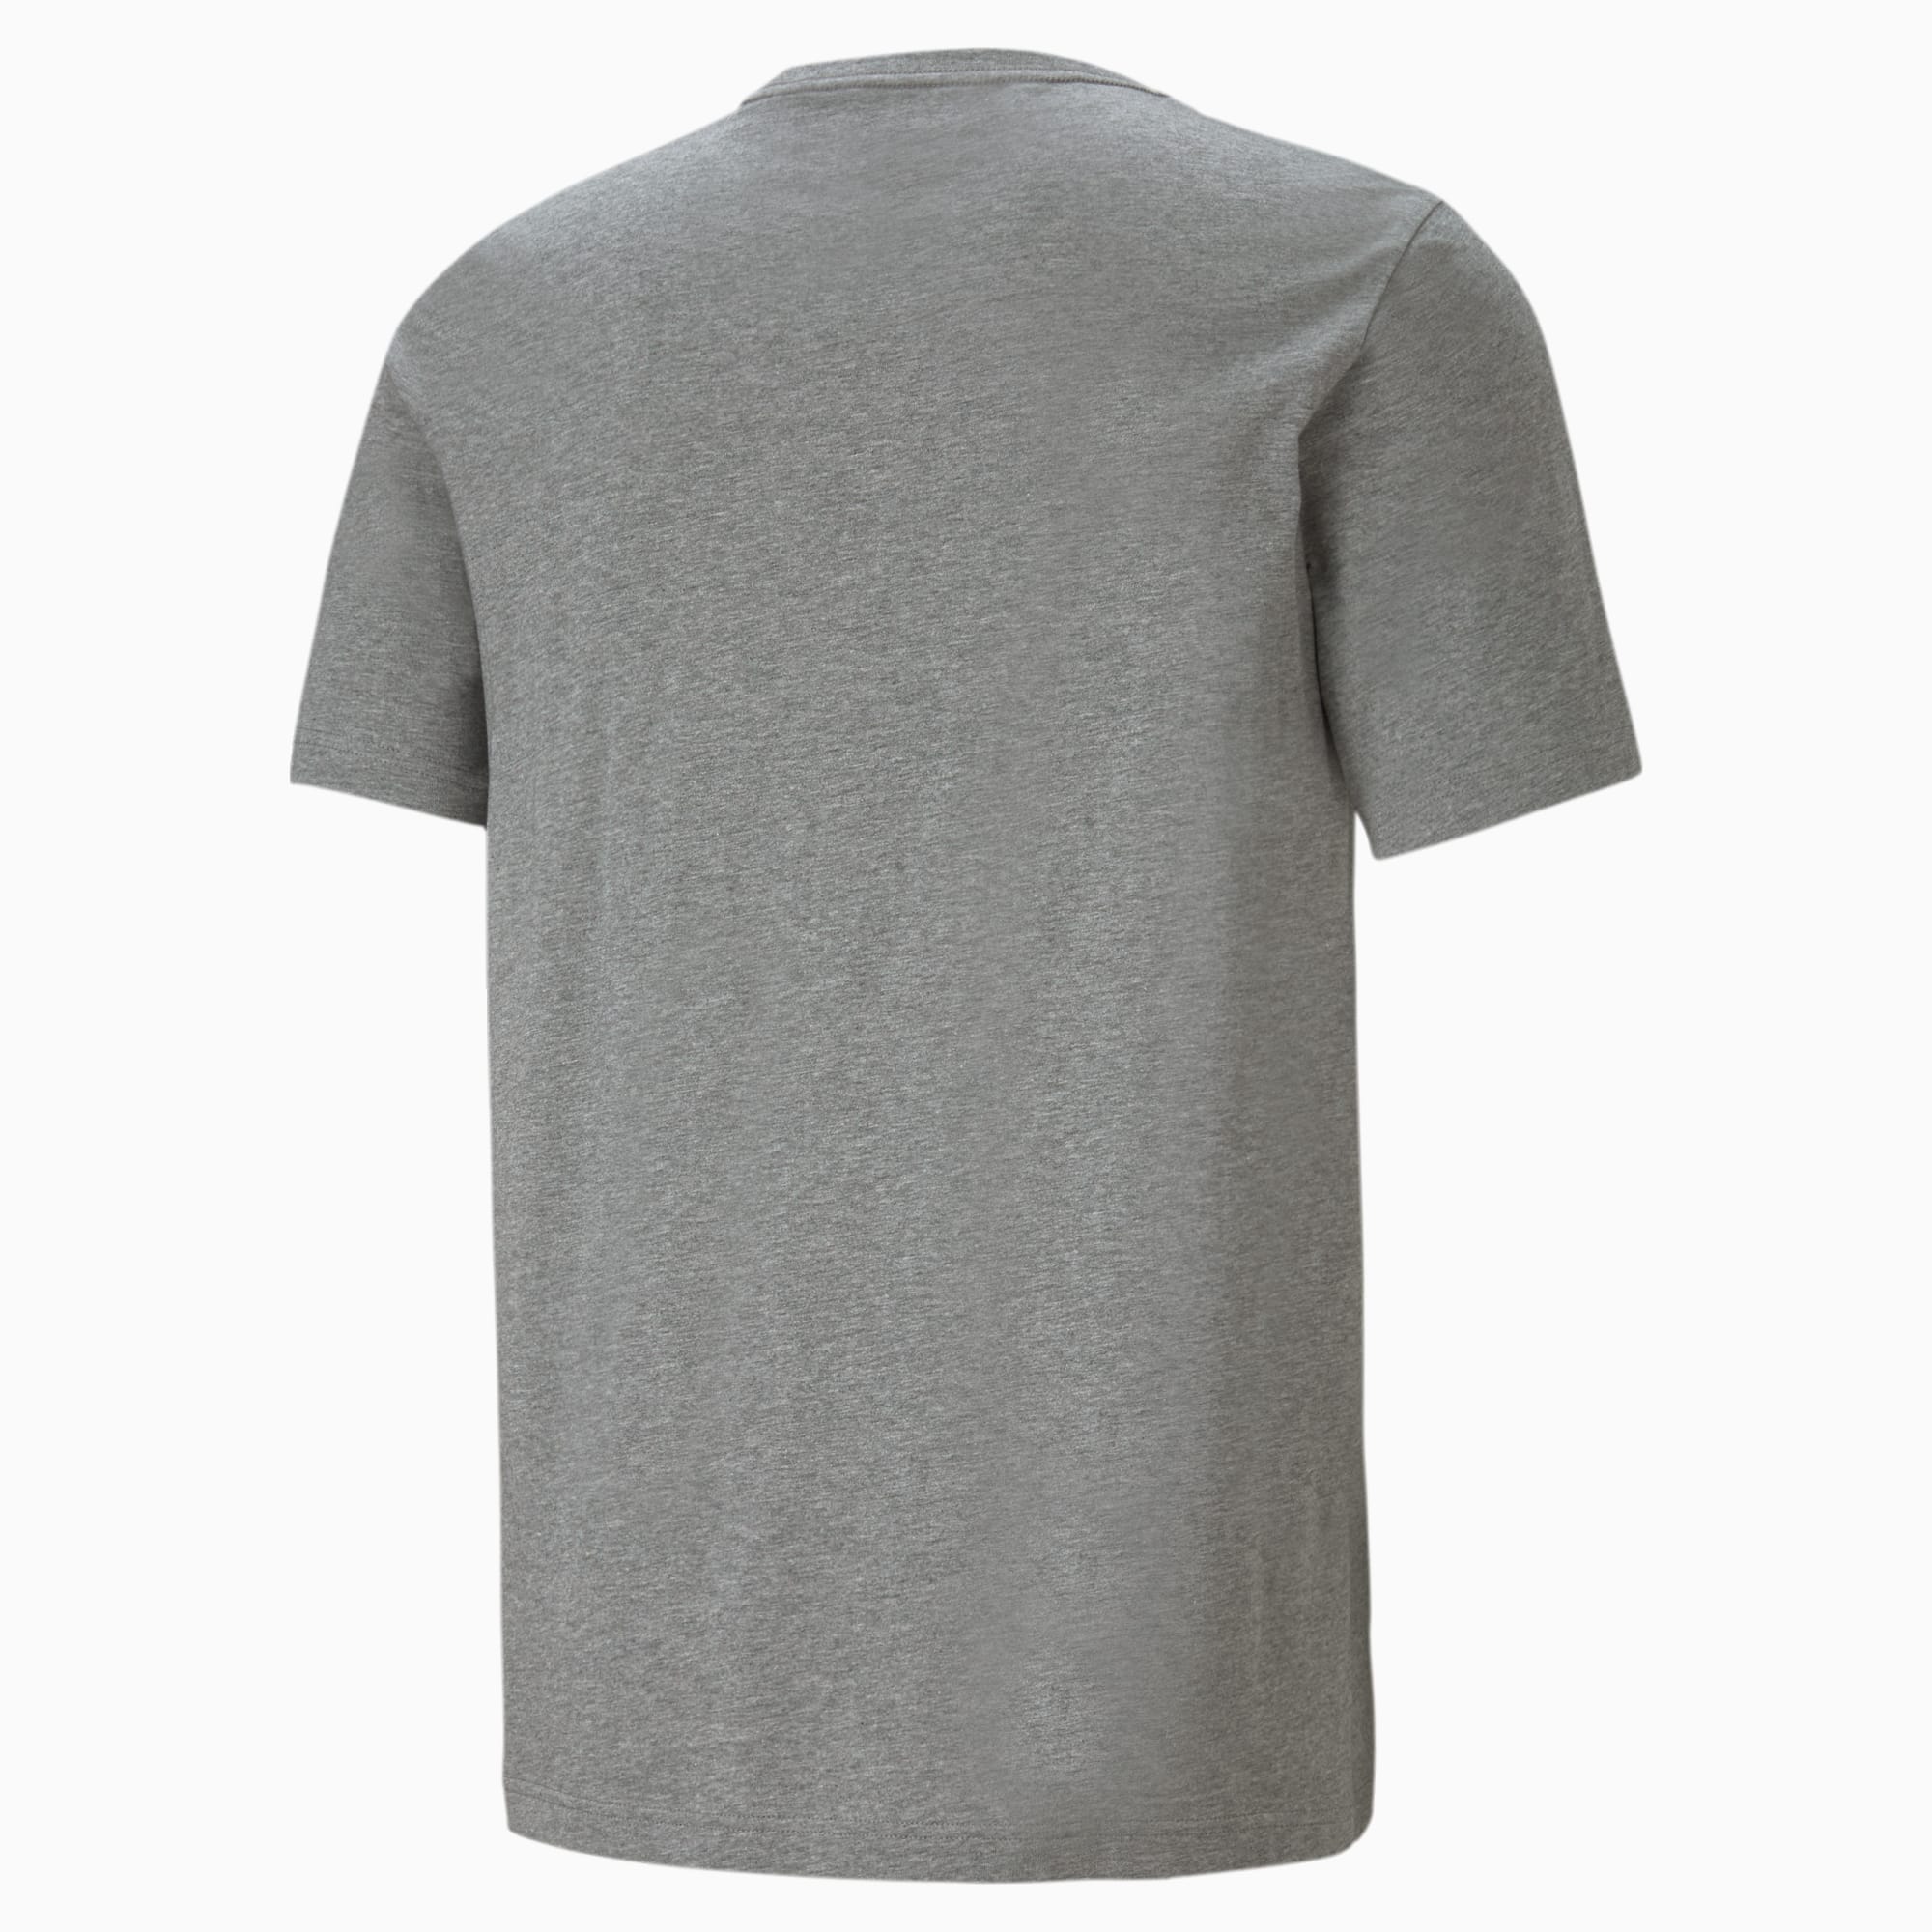 PUMA Essentials Logo Men's T-Shirt, Medium Grey Heather, Size XS, Clothing